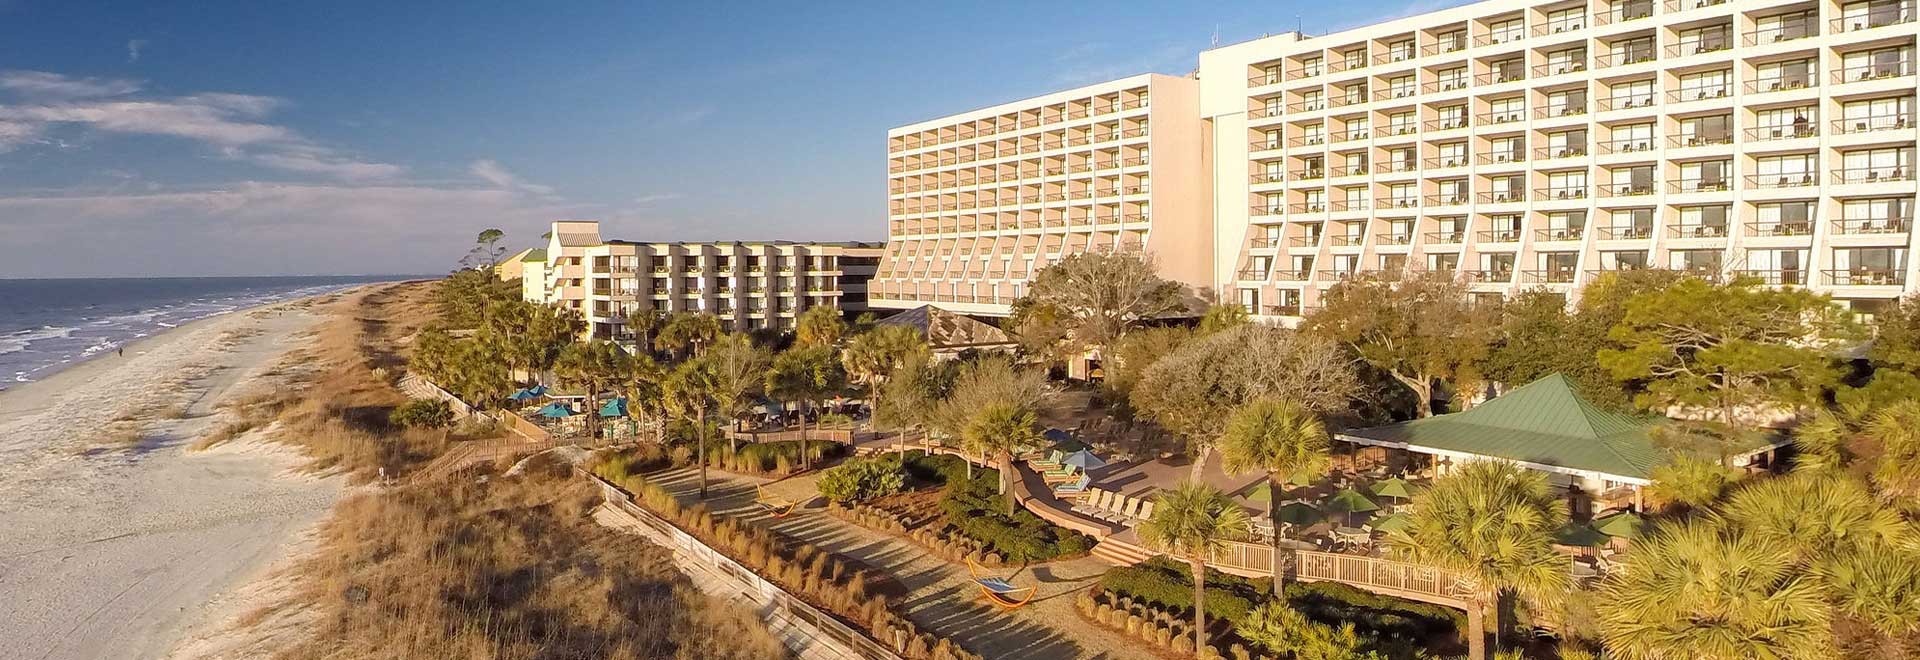 Hilton Head Marriott Resort & Spa, South Carolina - Book. Travel. Play.